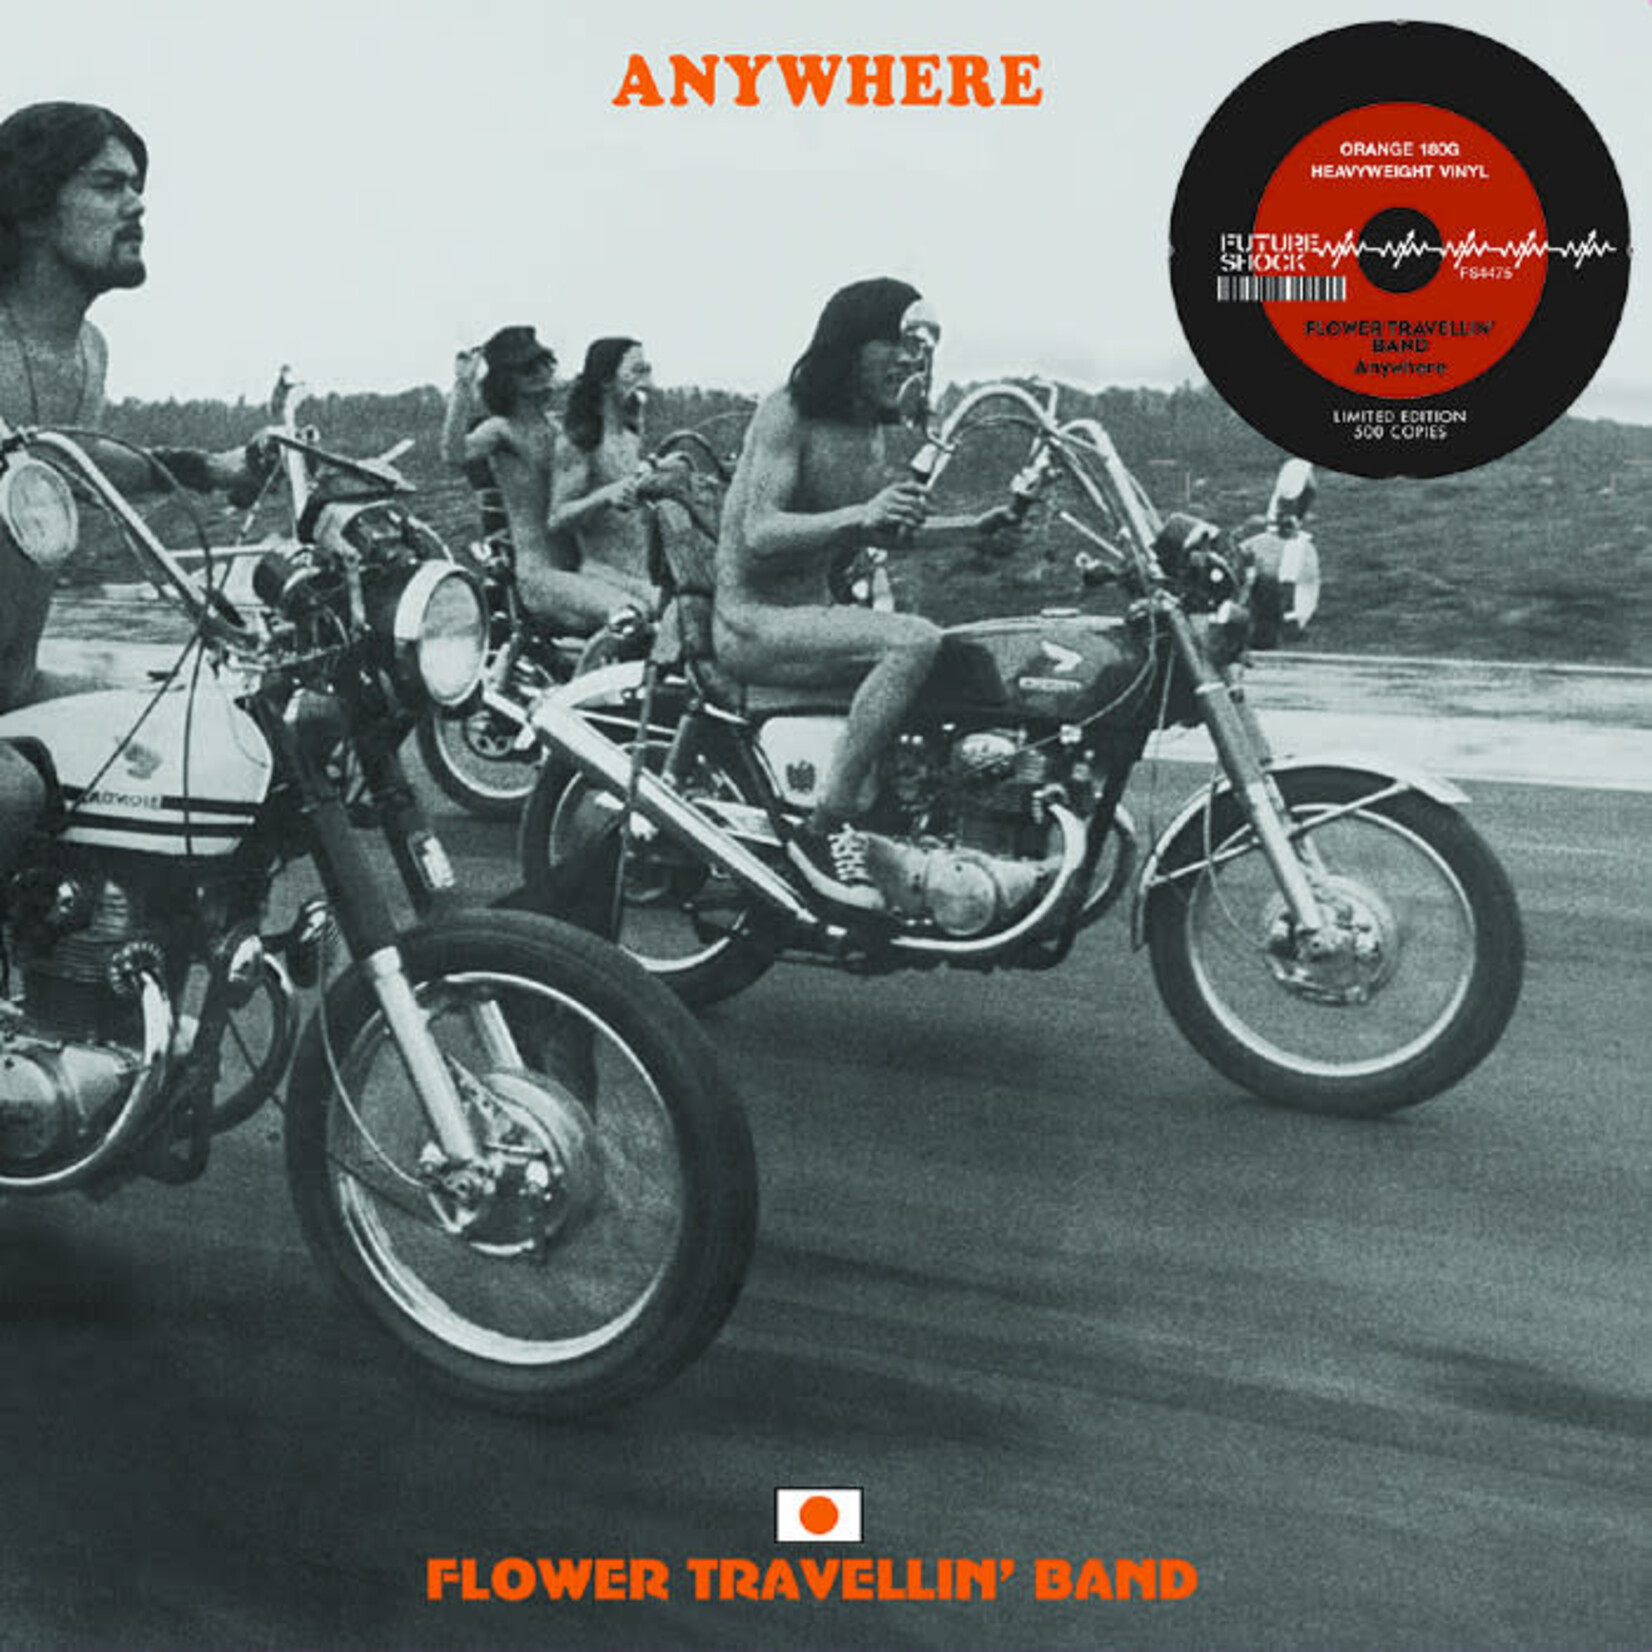 [New] Flower Travellin' Band: Anywhere (orange vinyl) [FUTURE SHOCK]